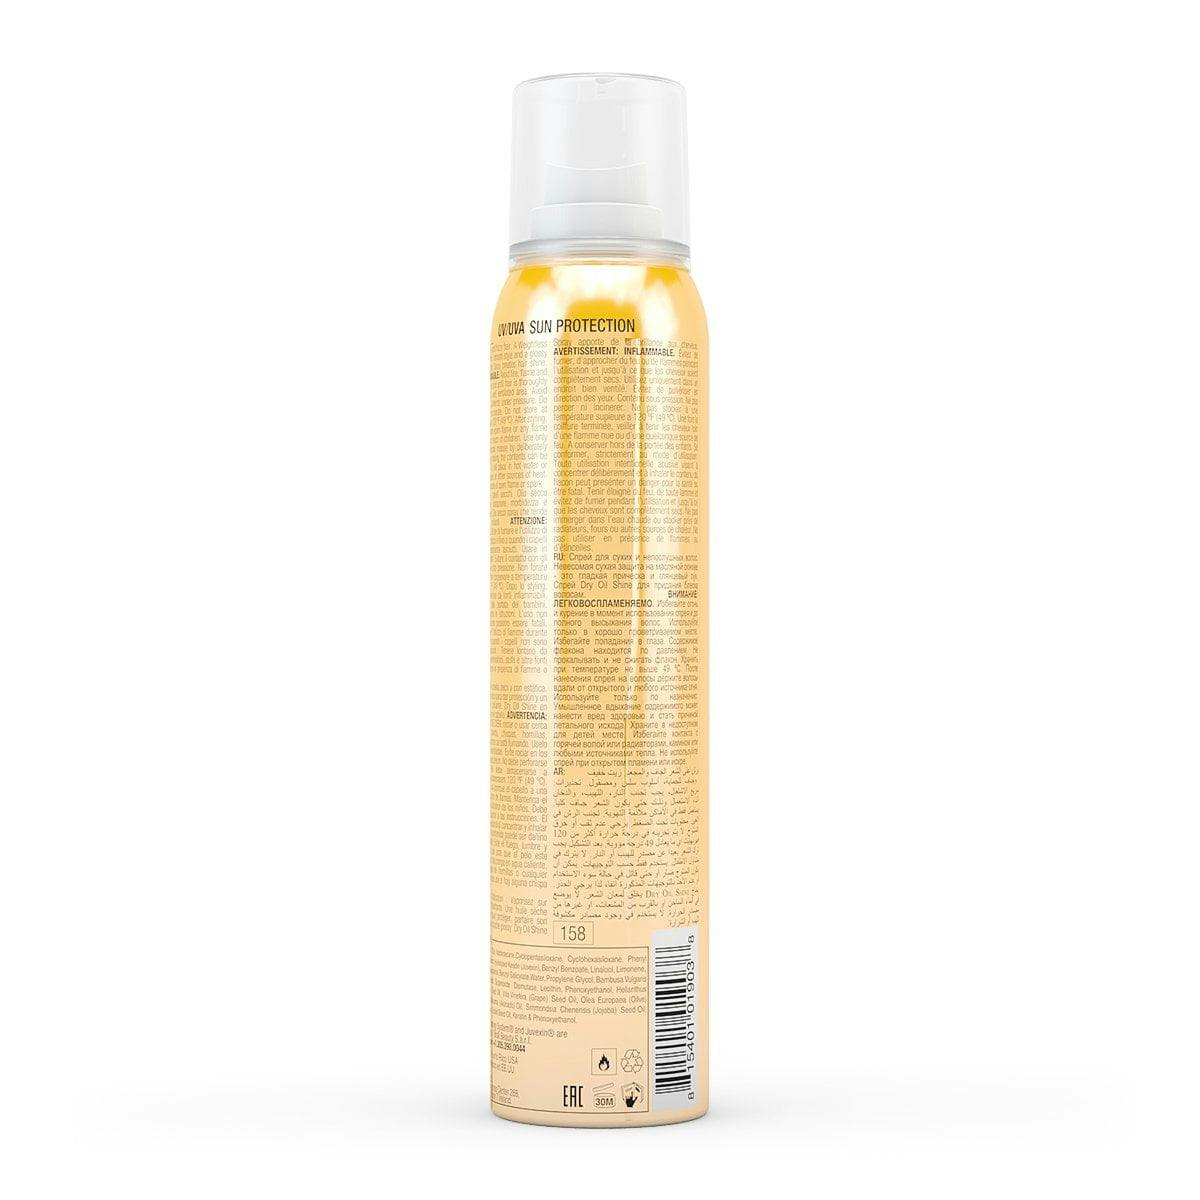 GK Hair Dry Oil Shine Spray 115ml